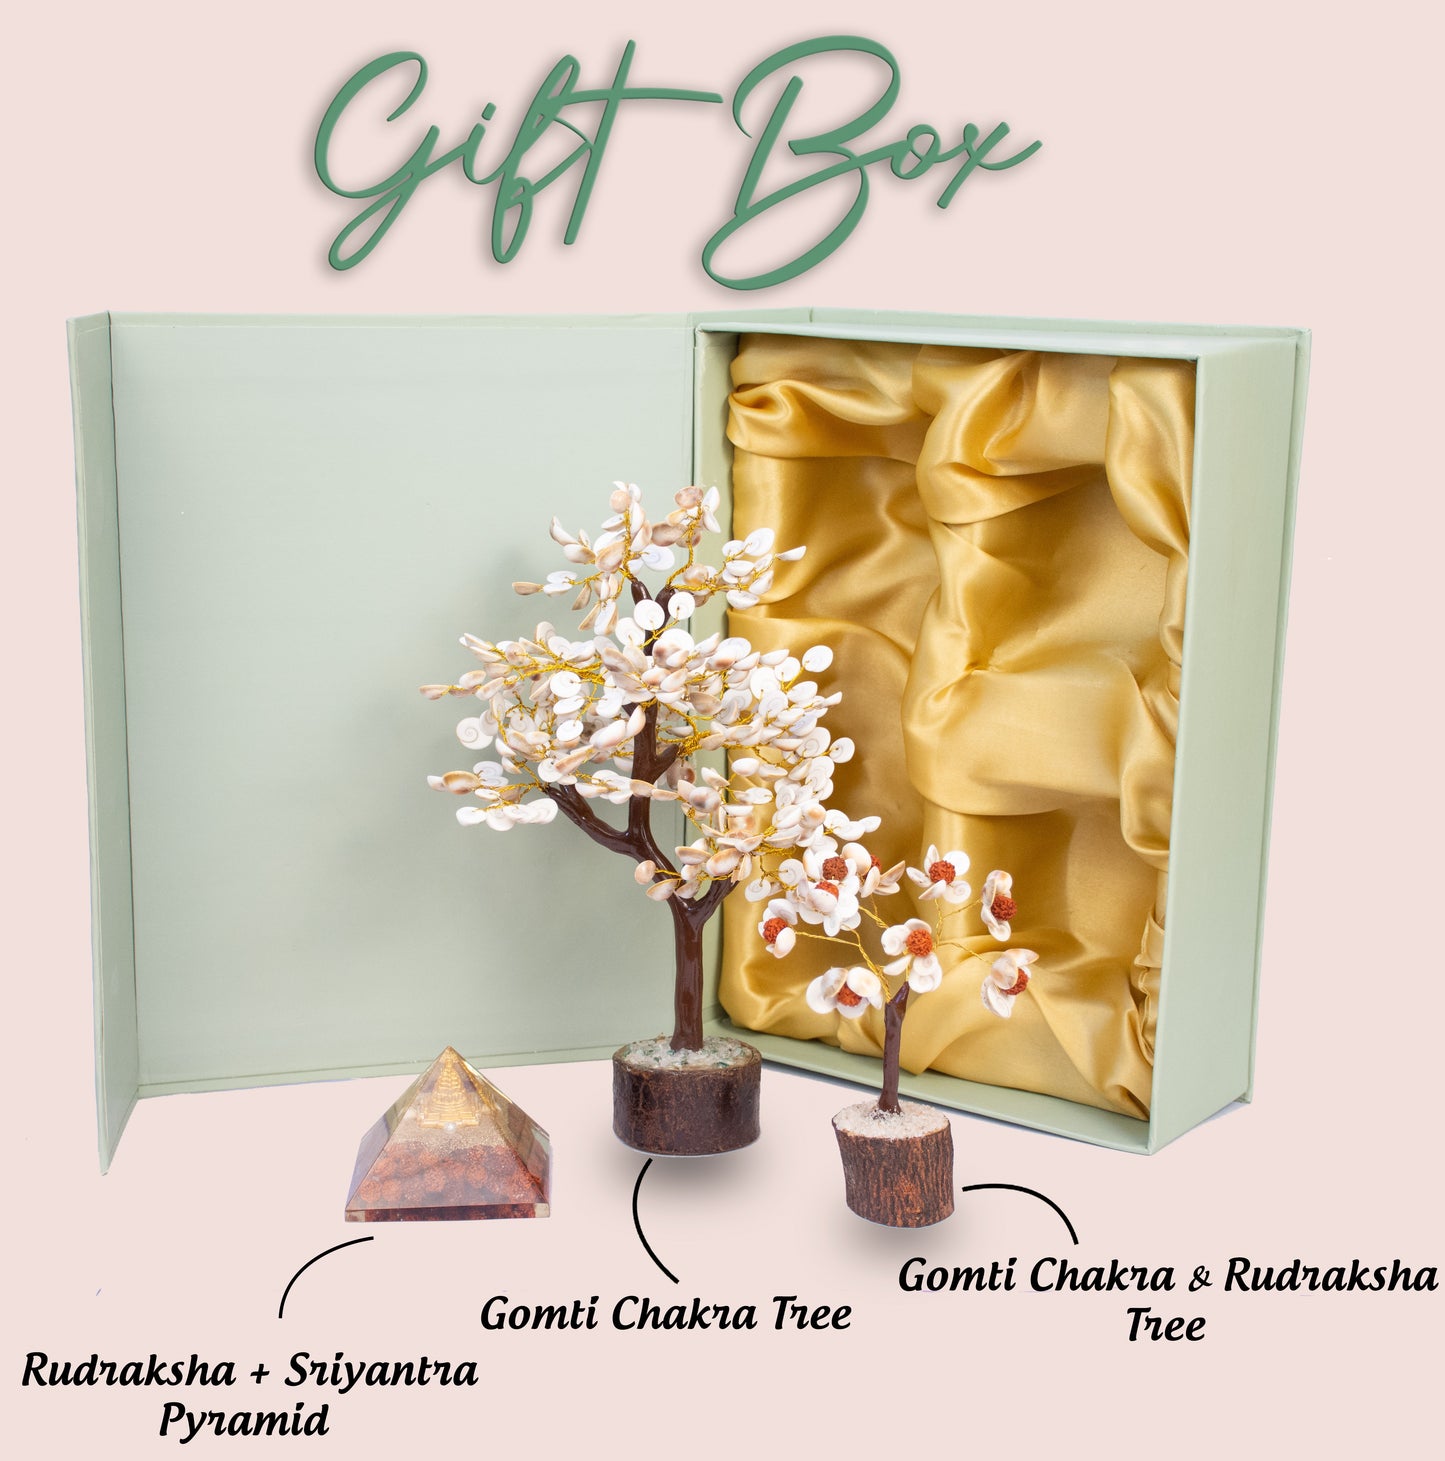 Mystic Unity Blessings Ensemble Containing Gomti Chakra Tree, Gomti Chakra with Rudraksha Tree, Rudraksha with Sri Yantra Pyramid for Gifting